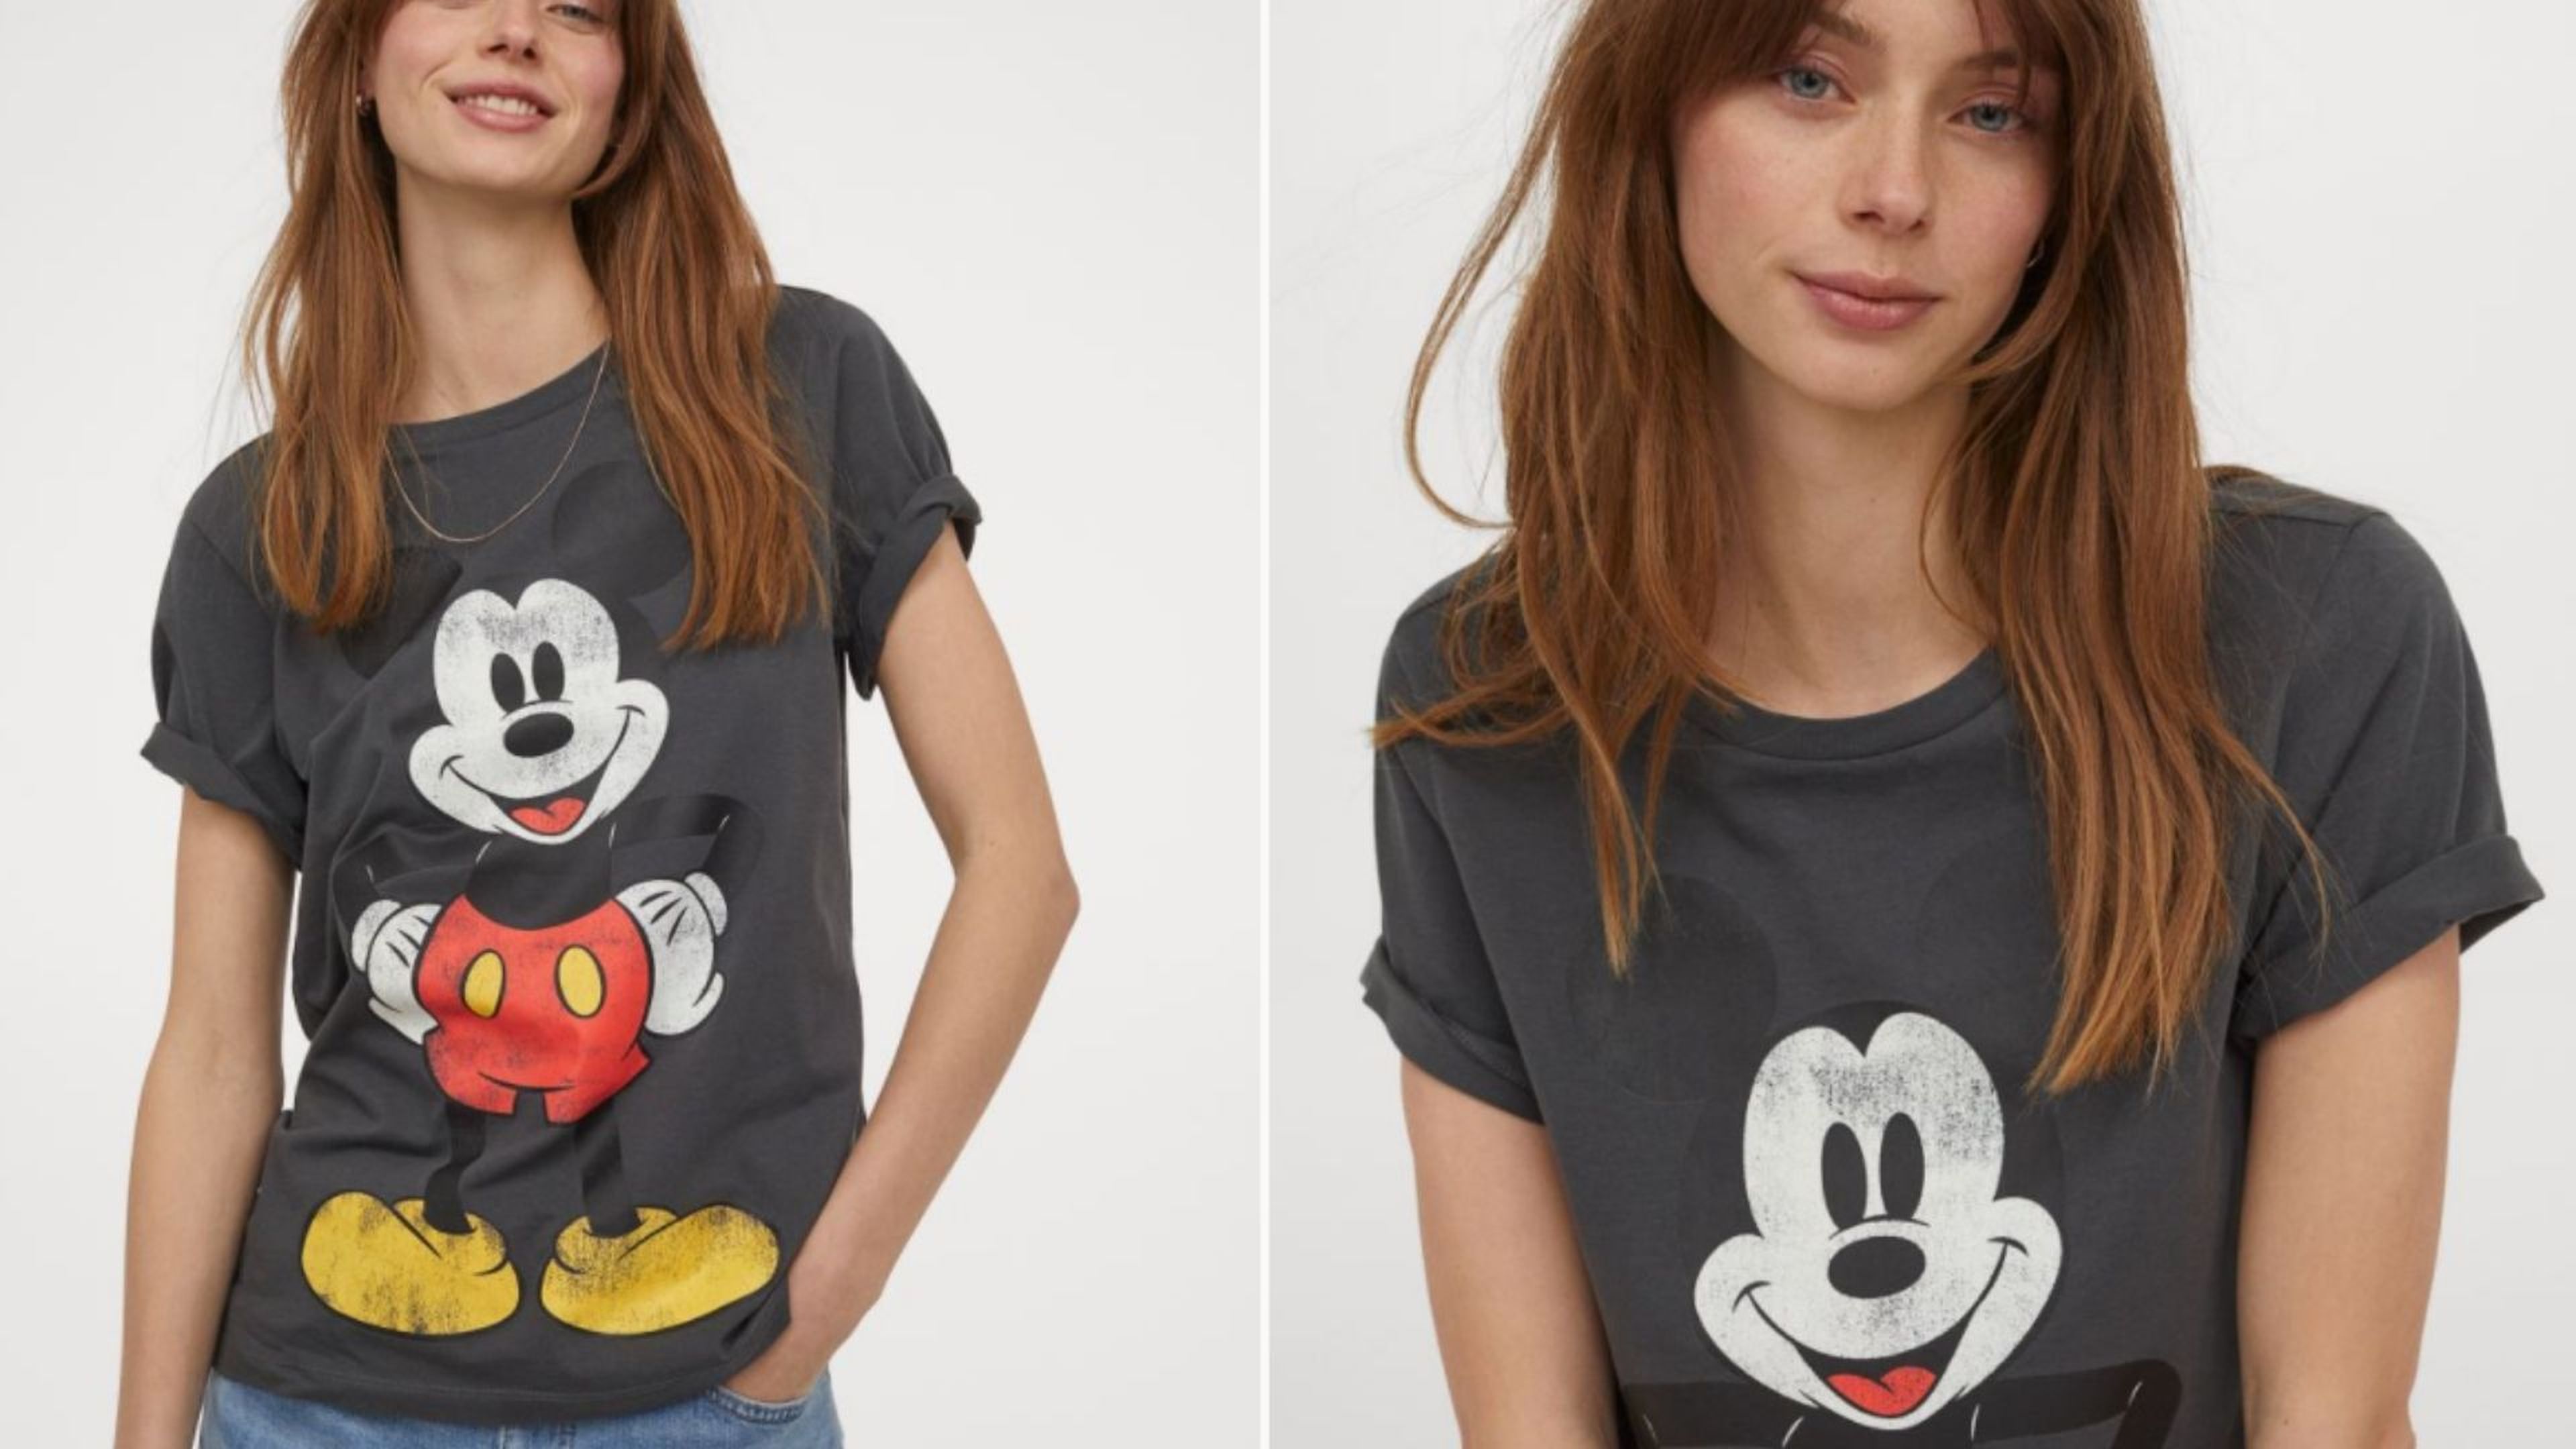 Camiseta HM Mujer Algodón Mickey Mouse, 9.99 euros.